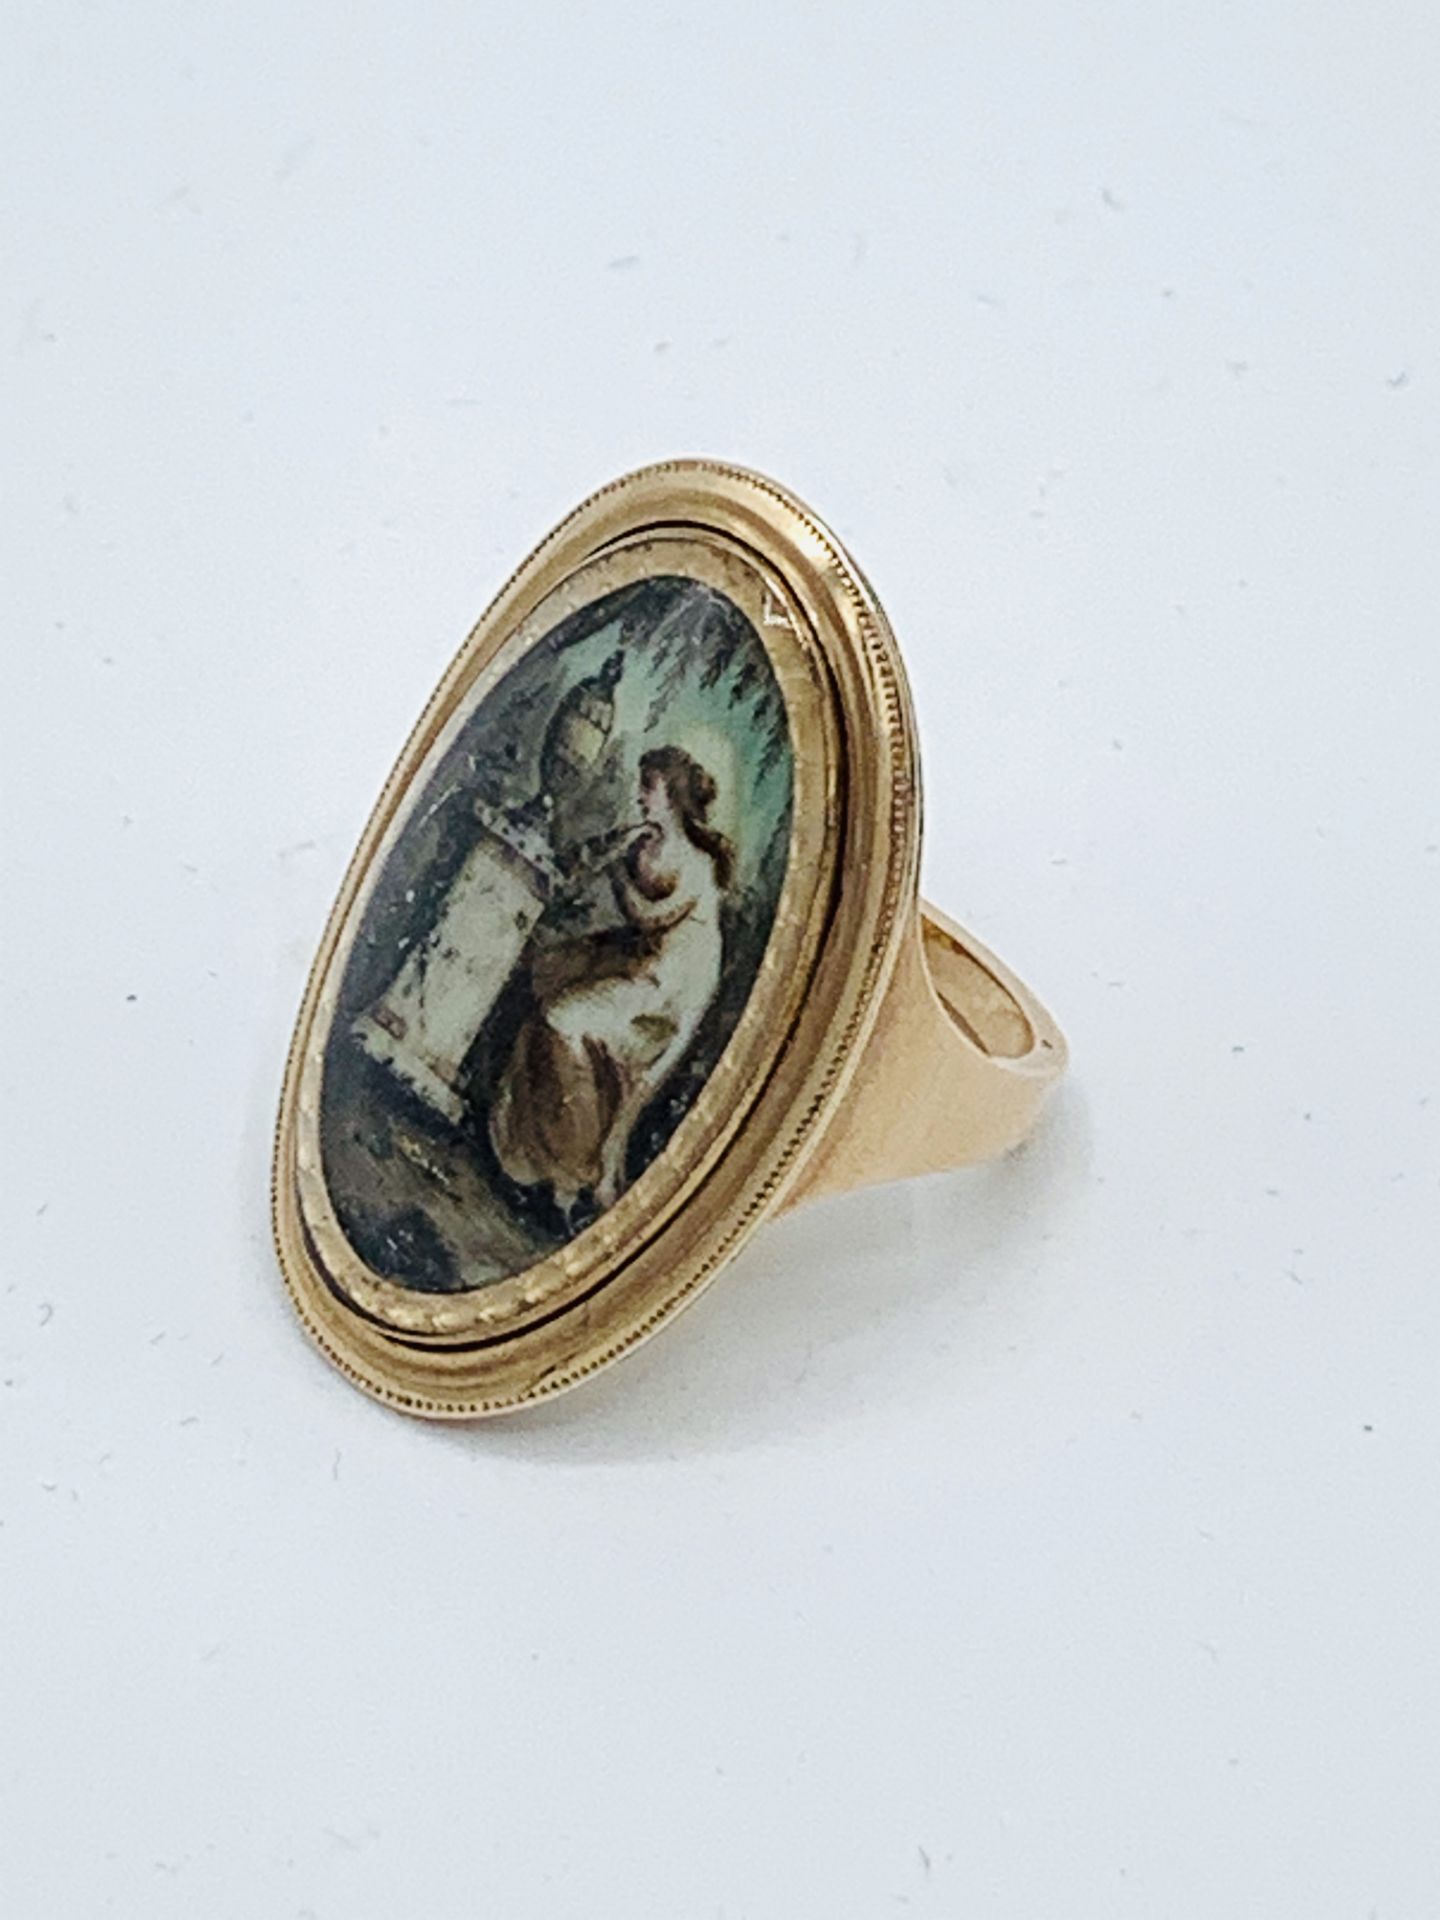 Georgian portrait ring dated 1792. Length 30mm, width 20mm. Size M. Wt. 6.5gms. Inscribed underside